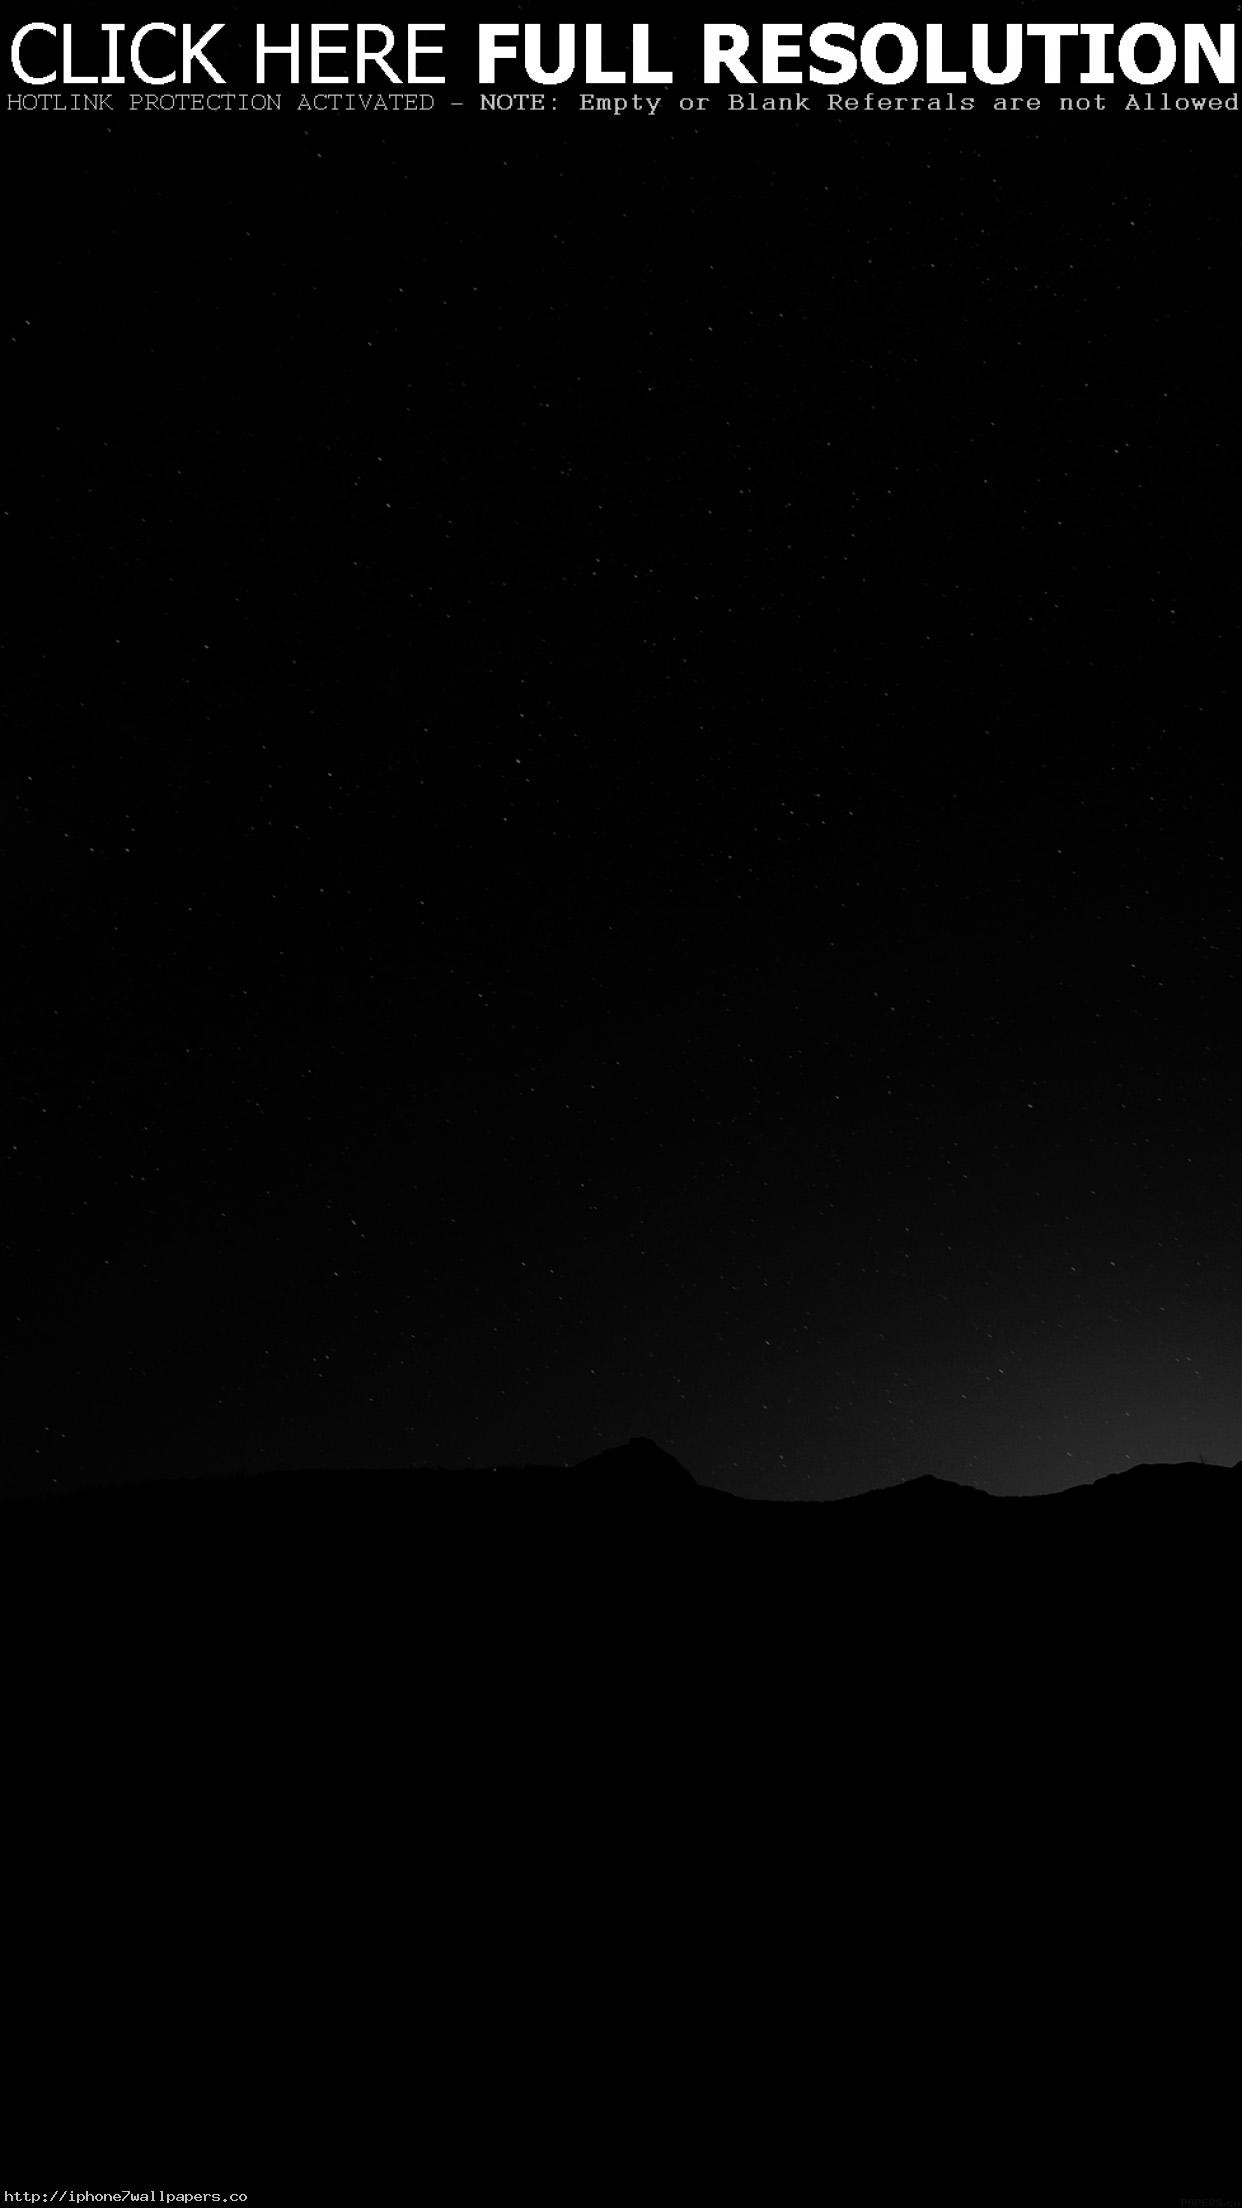 Night Sky Silent Wide Mountain Star Shining Nature - Warren Street Tube Station - HD Wallpaper 